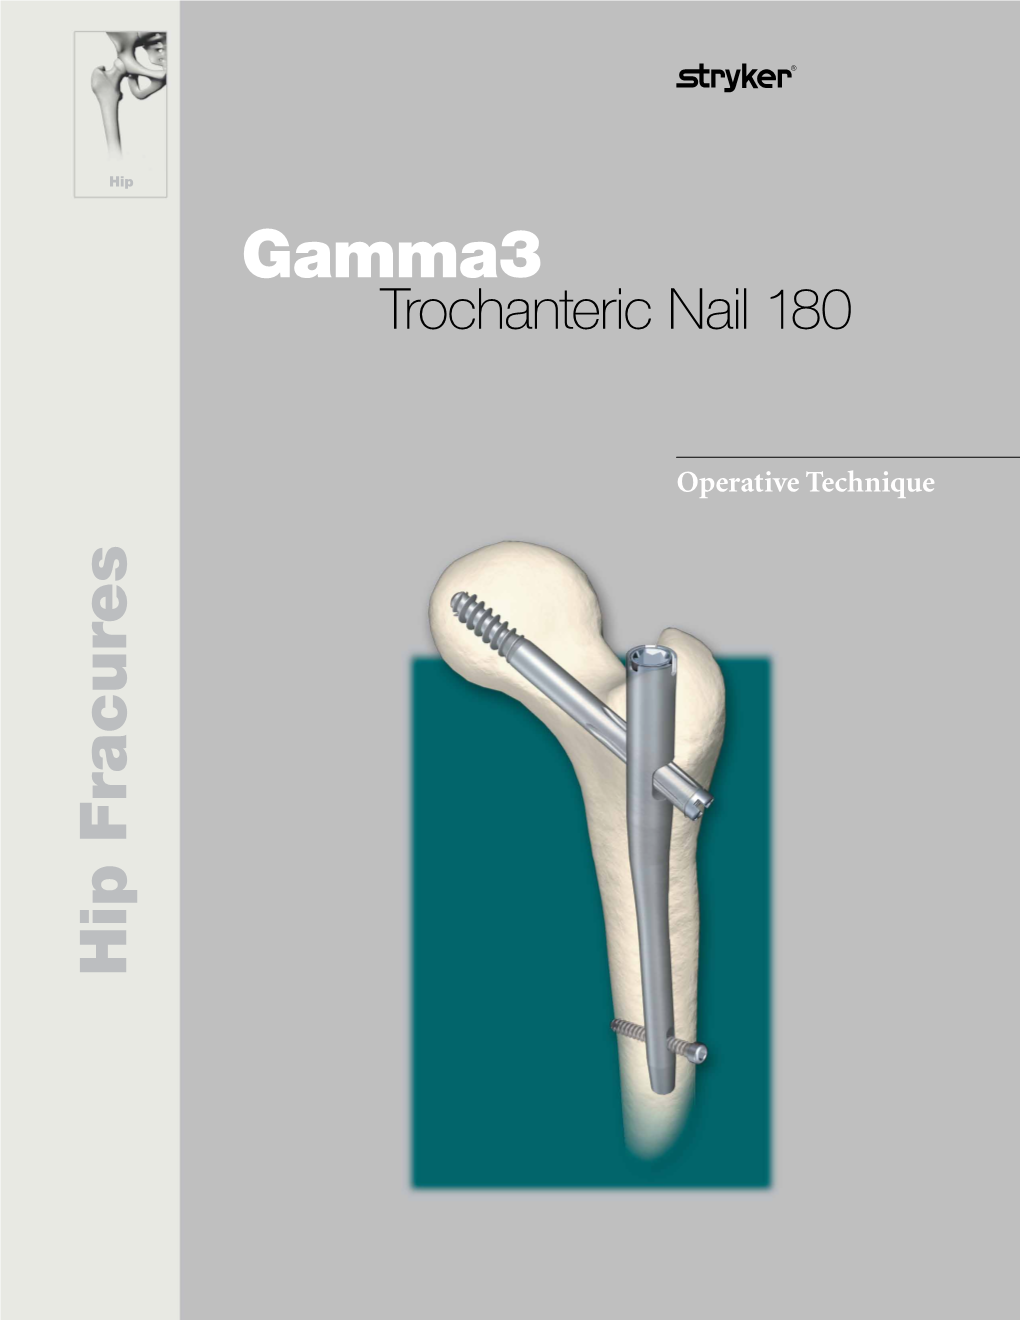 Gamma3 Trochanteric Nail 180